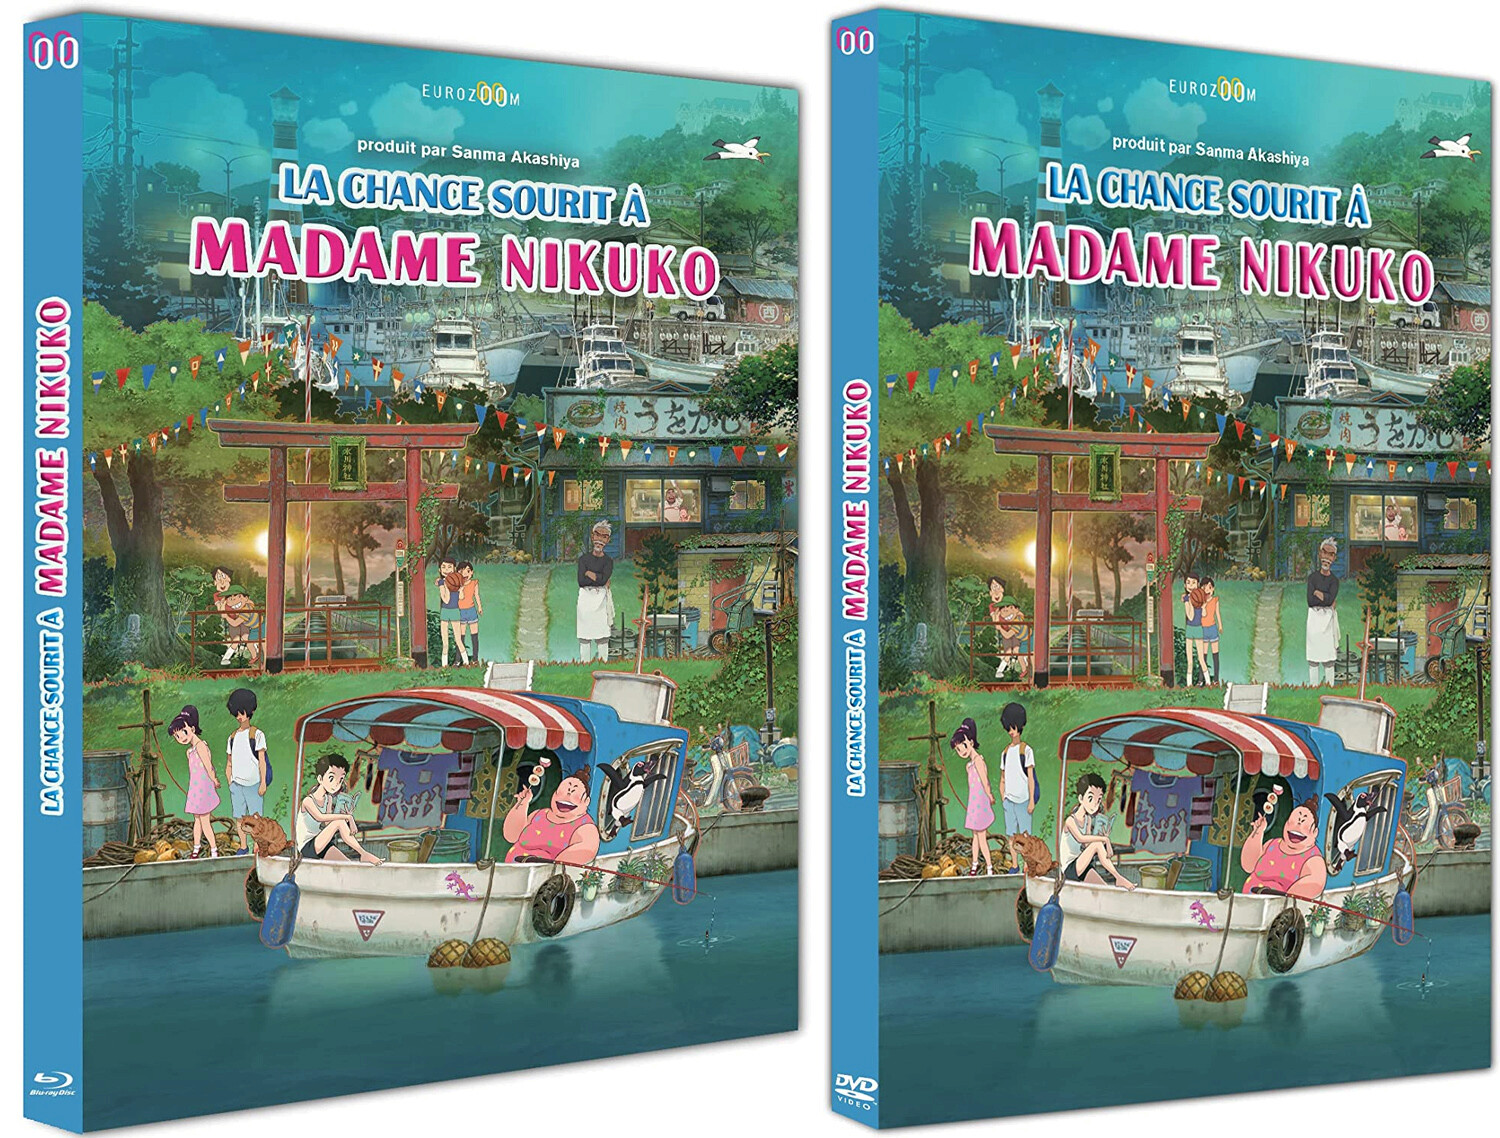 La Chance sourit à Madame Nikuko en DVD et Blu-ray chez Eurozoom 06_cha11